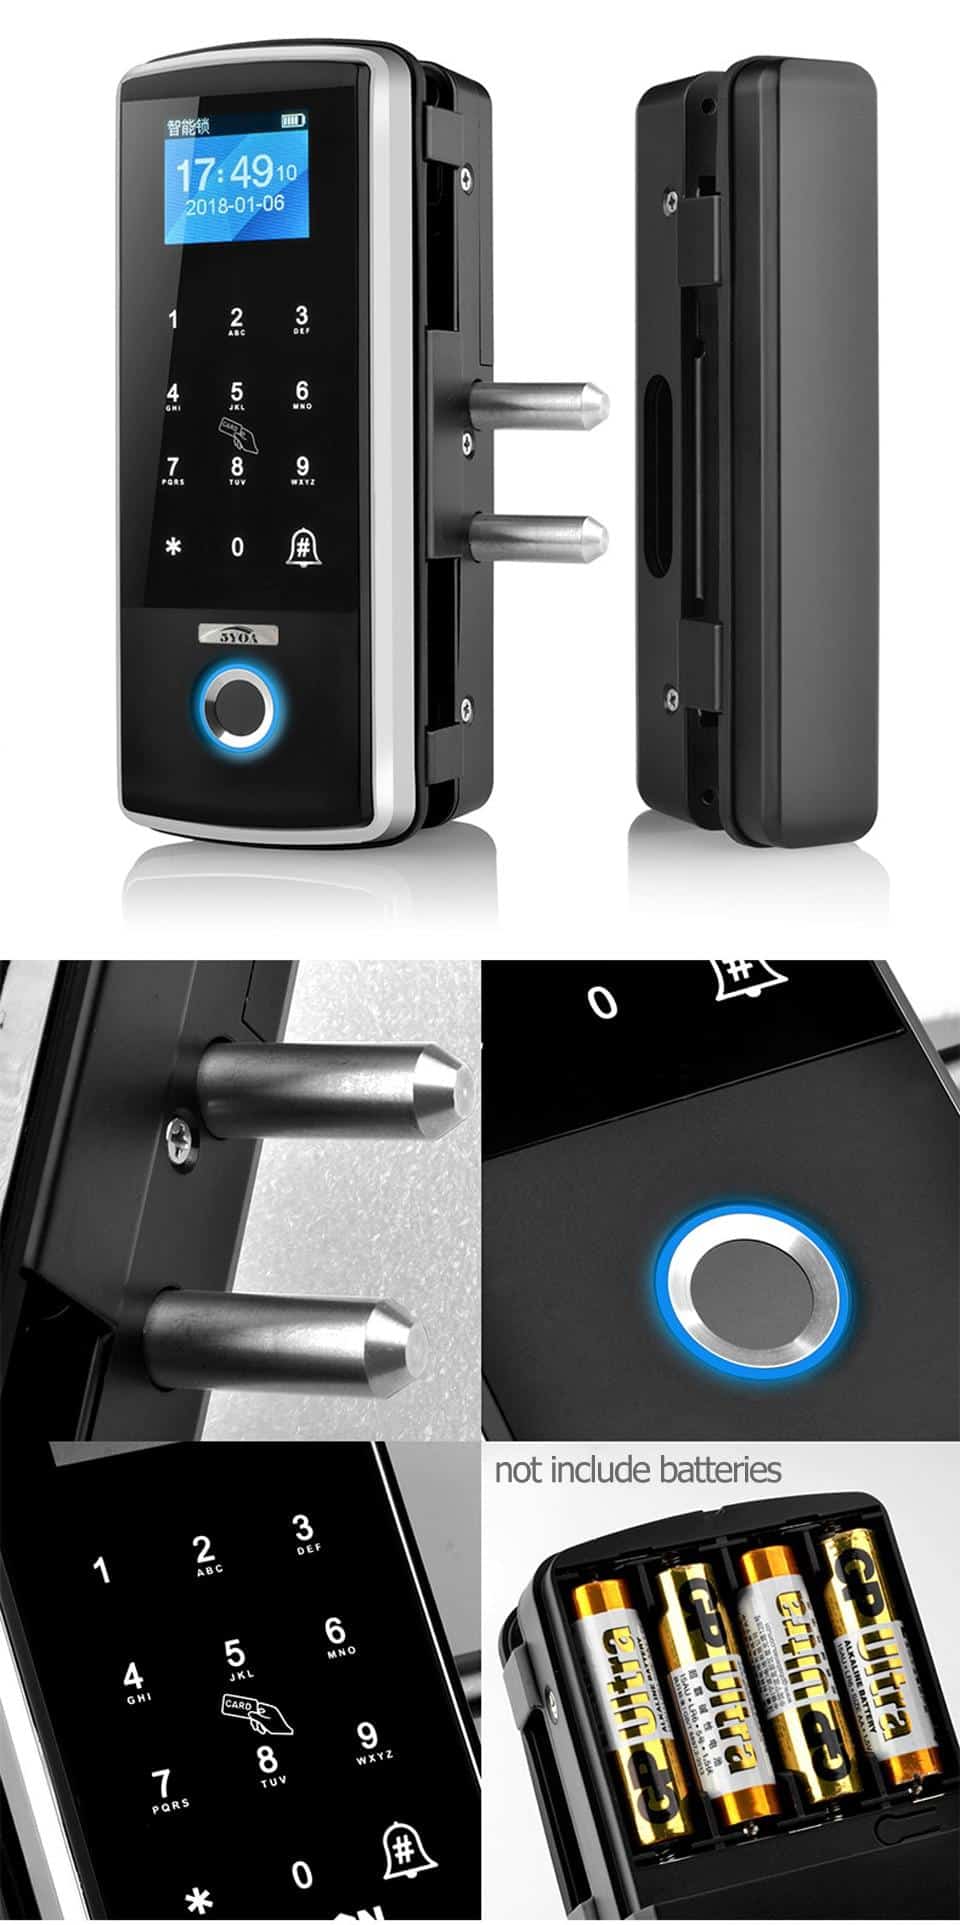 Smart Door Fingerprint Lock Electronic Digital Gate Opener Electric RFID Biometric finger print security Glass Password Card